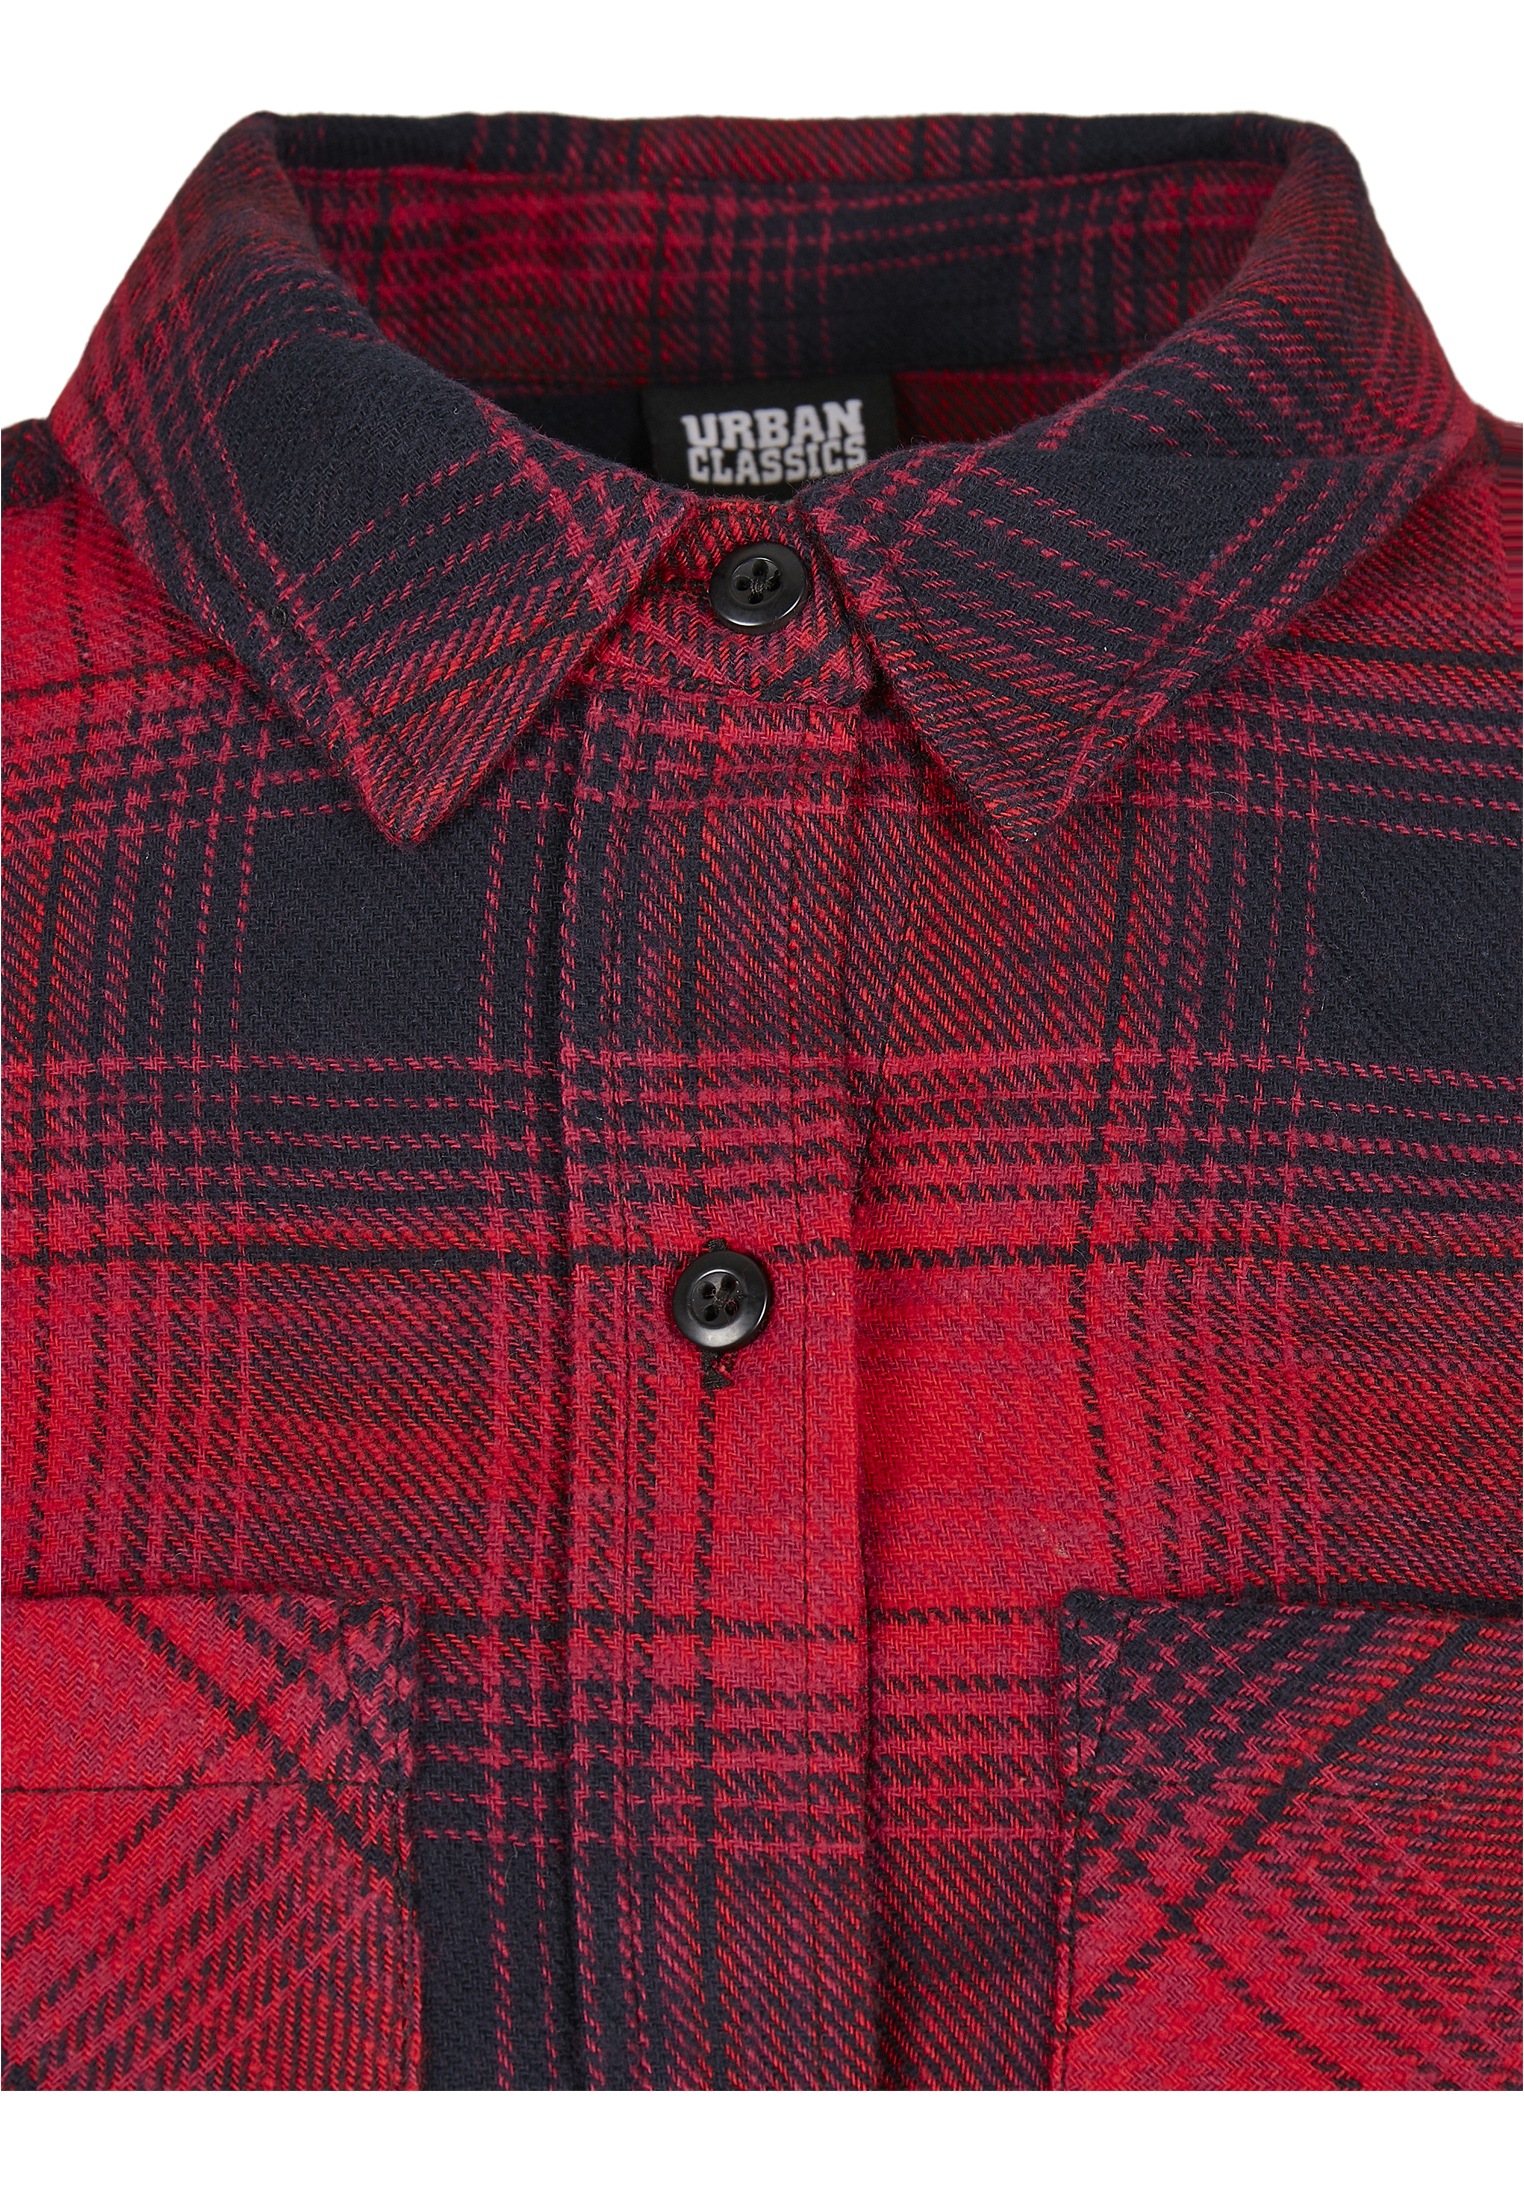 URBAN CLASSICS Shirtkleid »Urban Classics Damen Ladies Check Shirt Dress«, (1 tlg.)